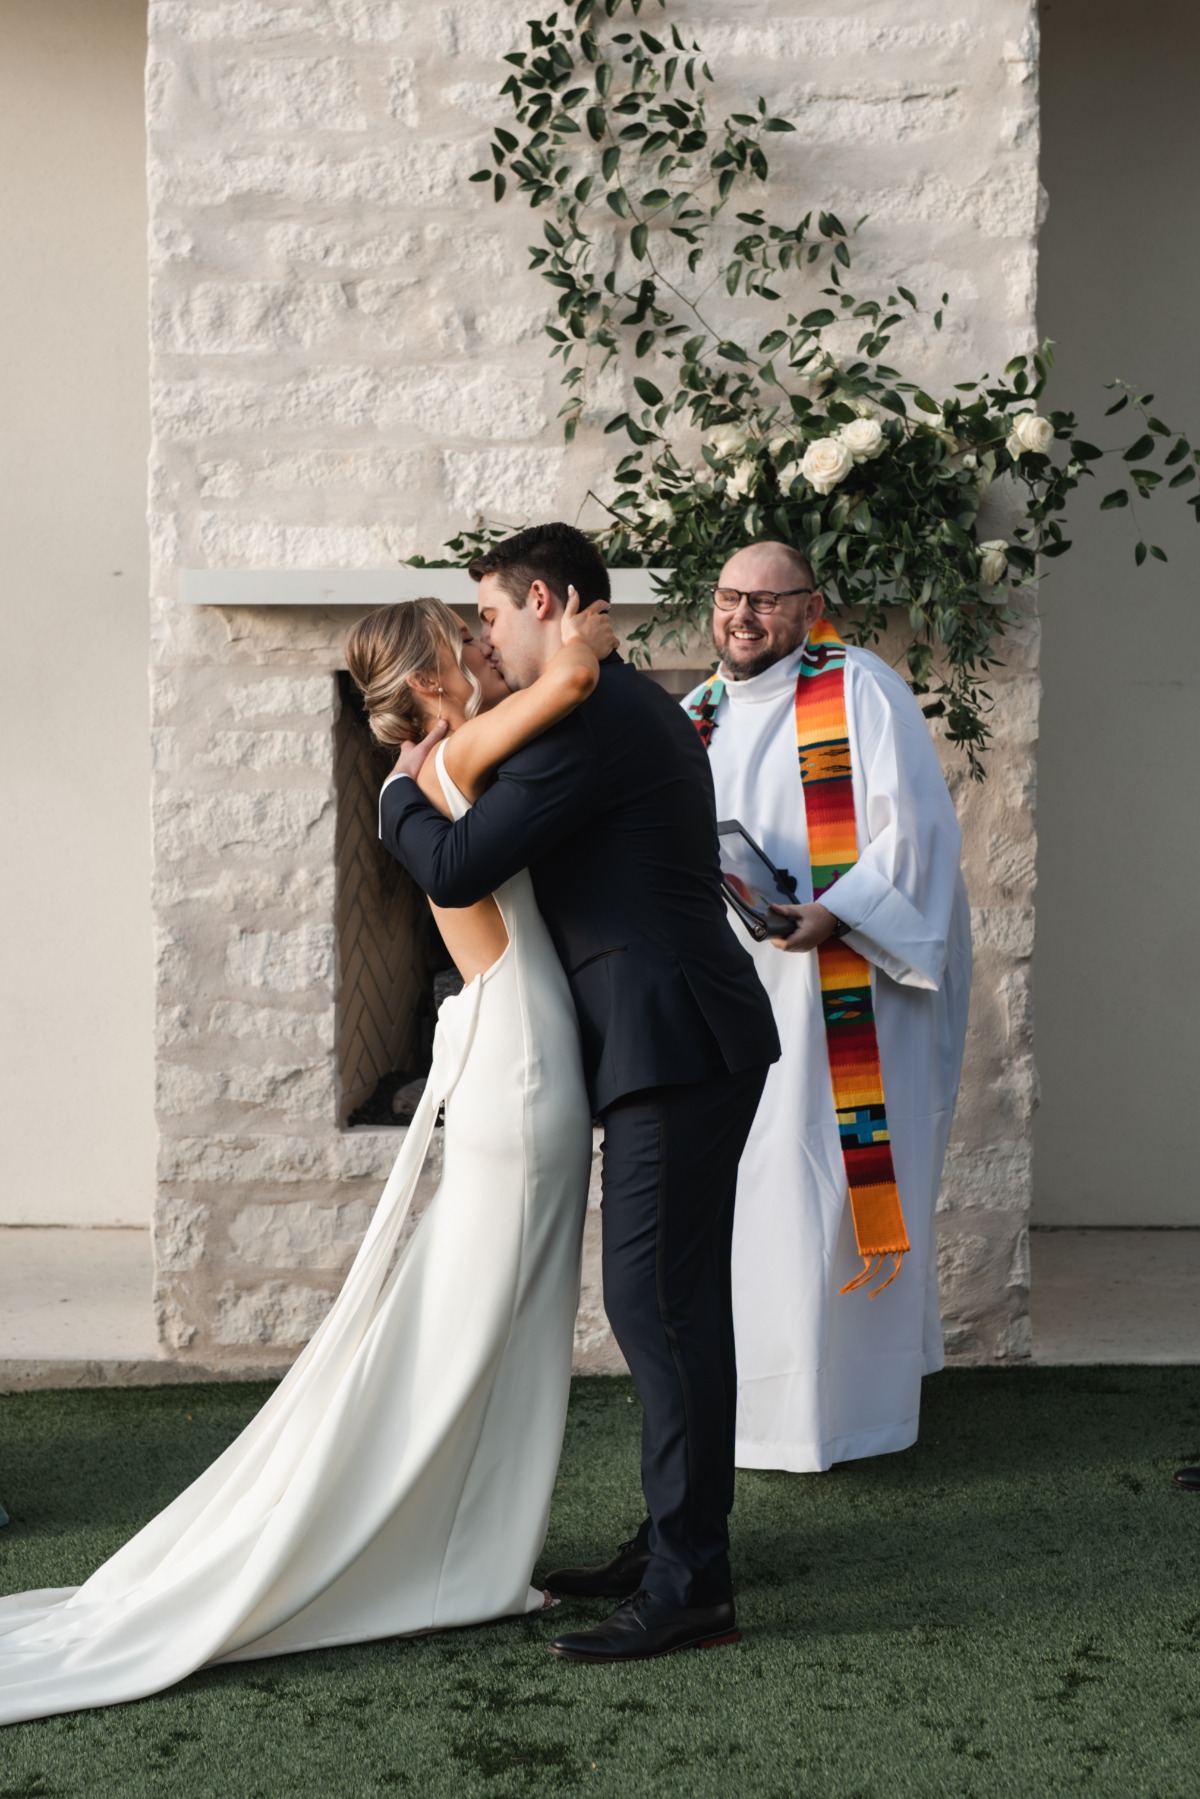 Jewish wedding traditions